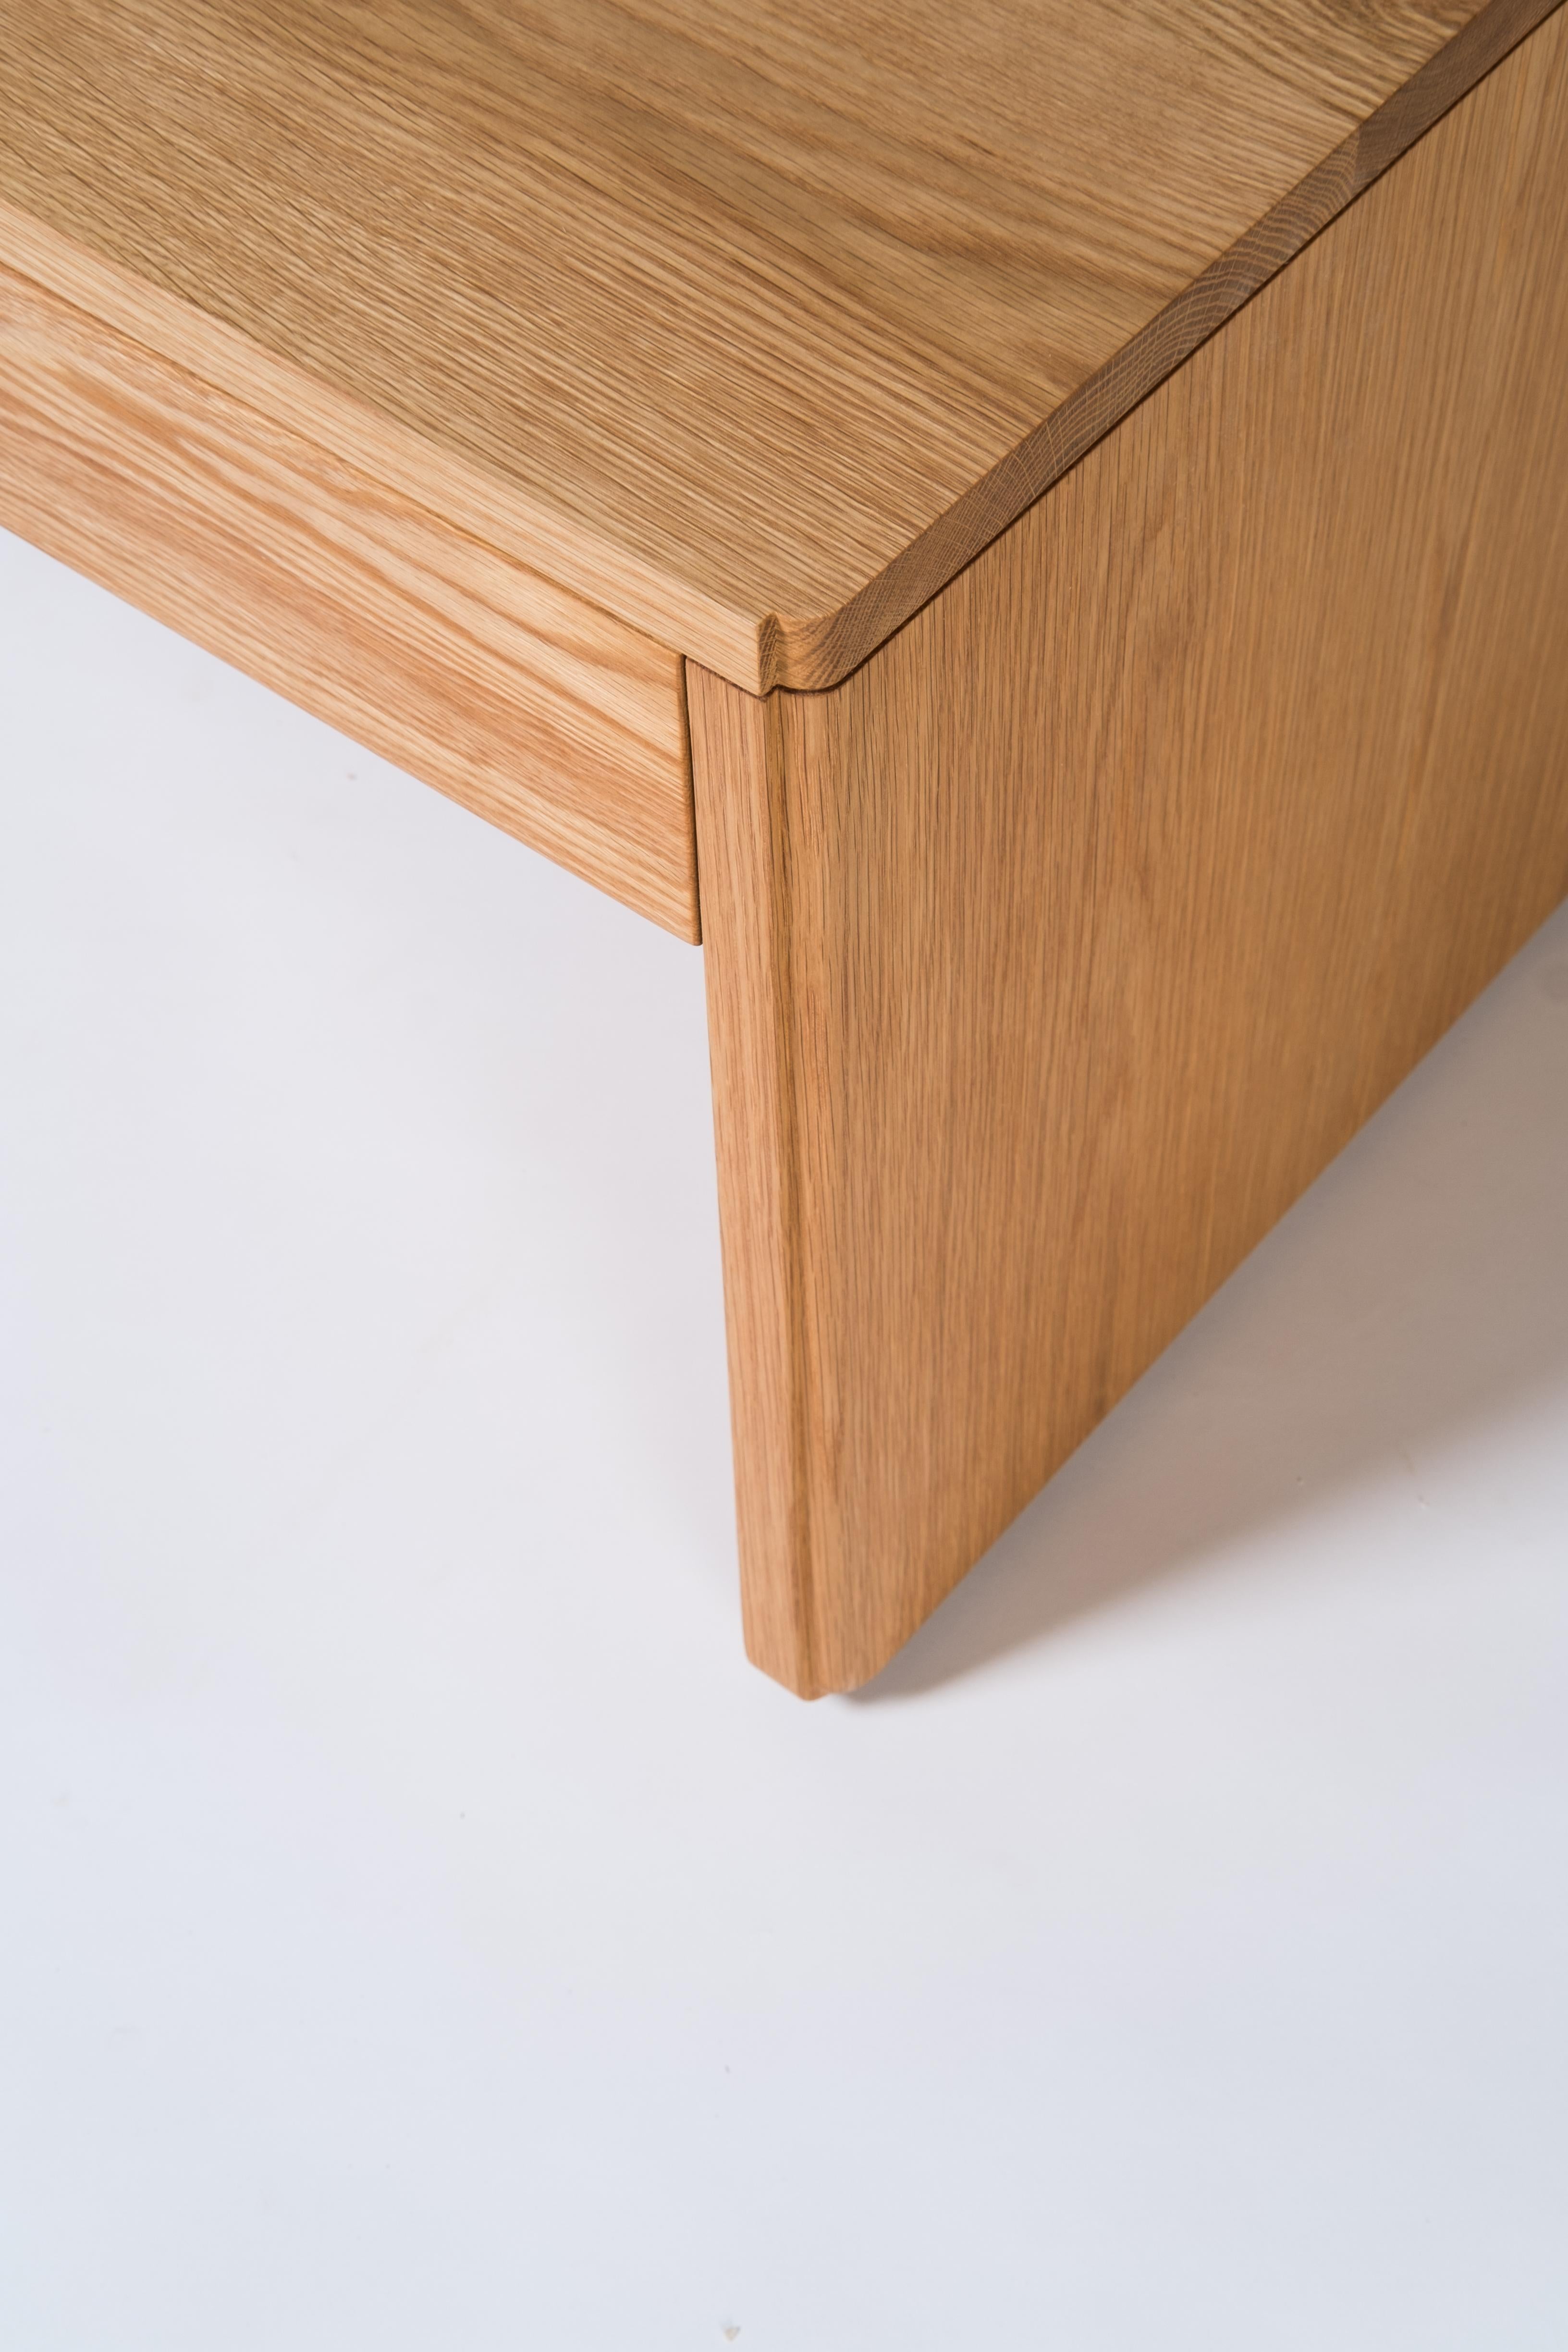 American Slate Side Table by Tretiak Works, Handmade Contemporary Walnut Nightstand For Sale